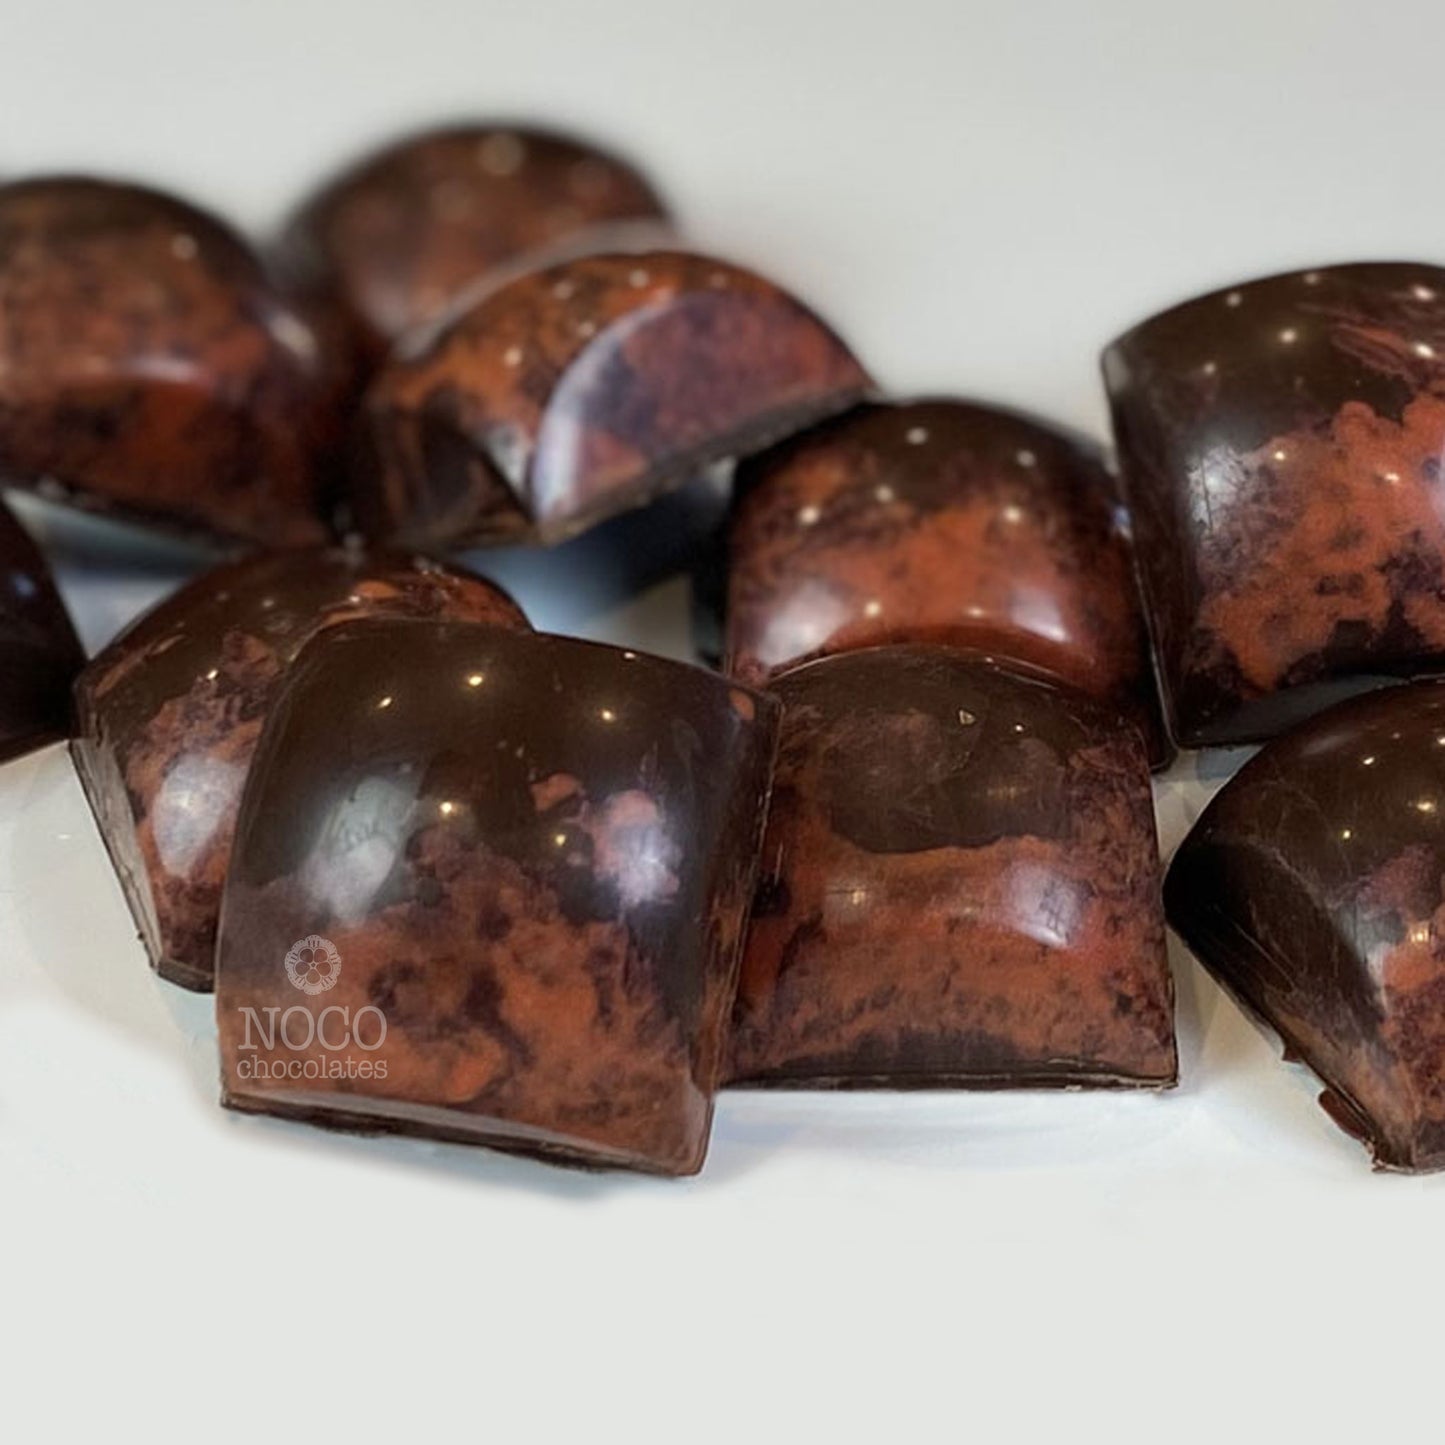 all-natural dark chocolate chili pepper bonbon